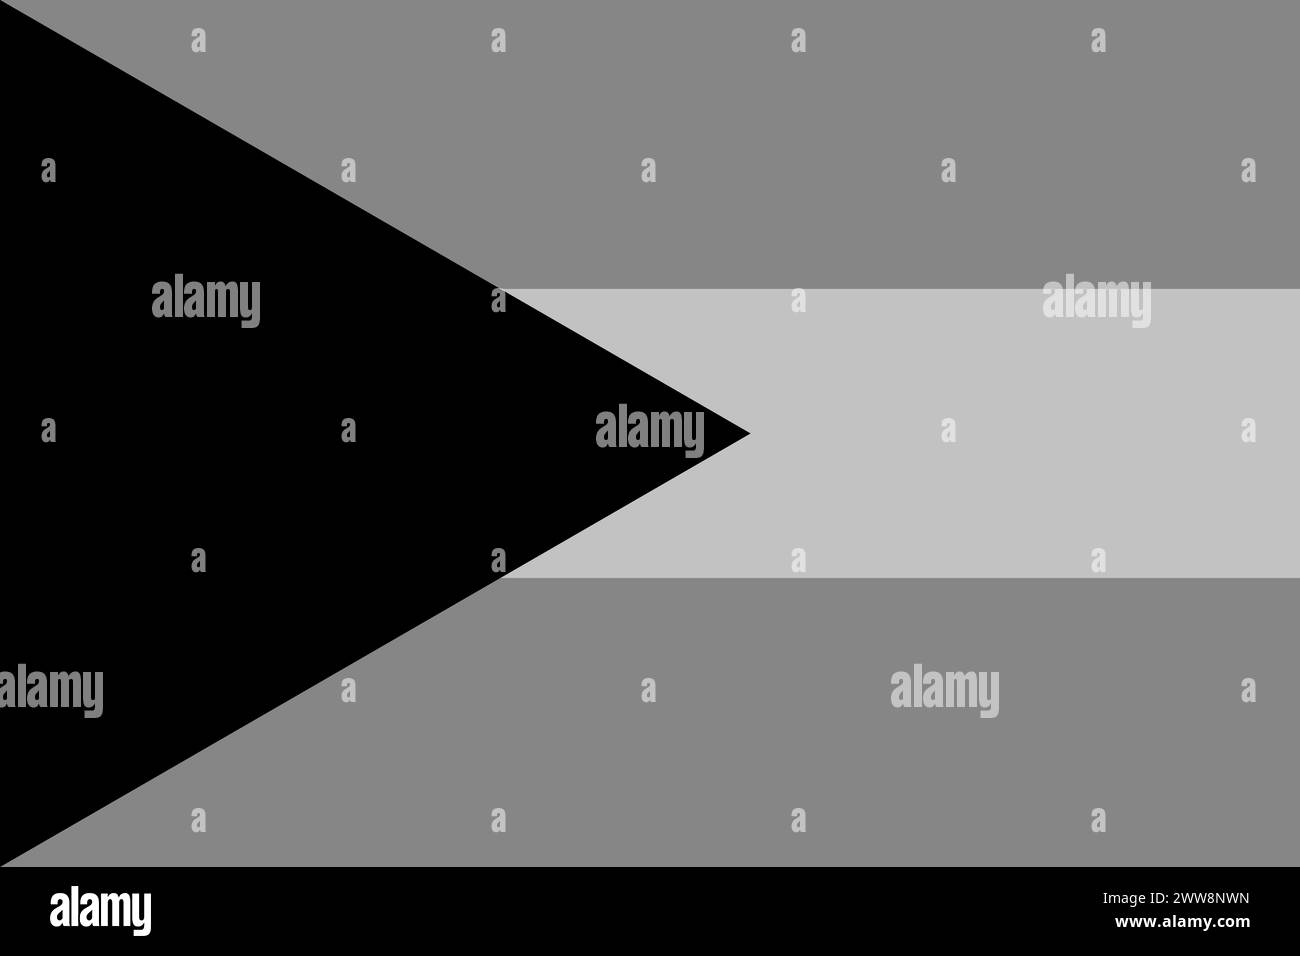 Bahamas flag - greyscale monochrome vector illustration. Flag in black and white Stock Vector